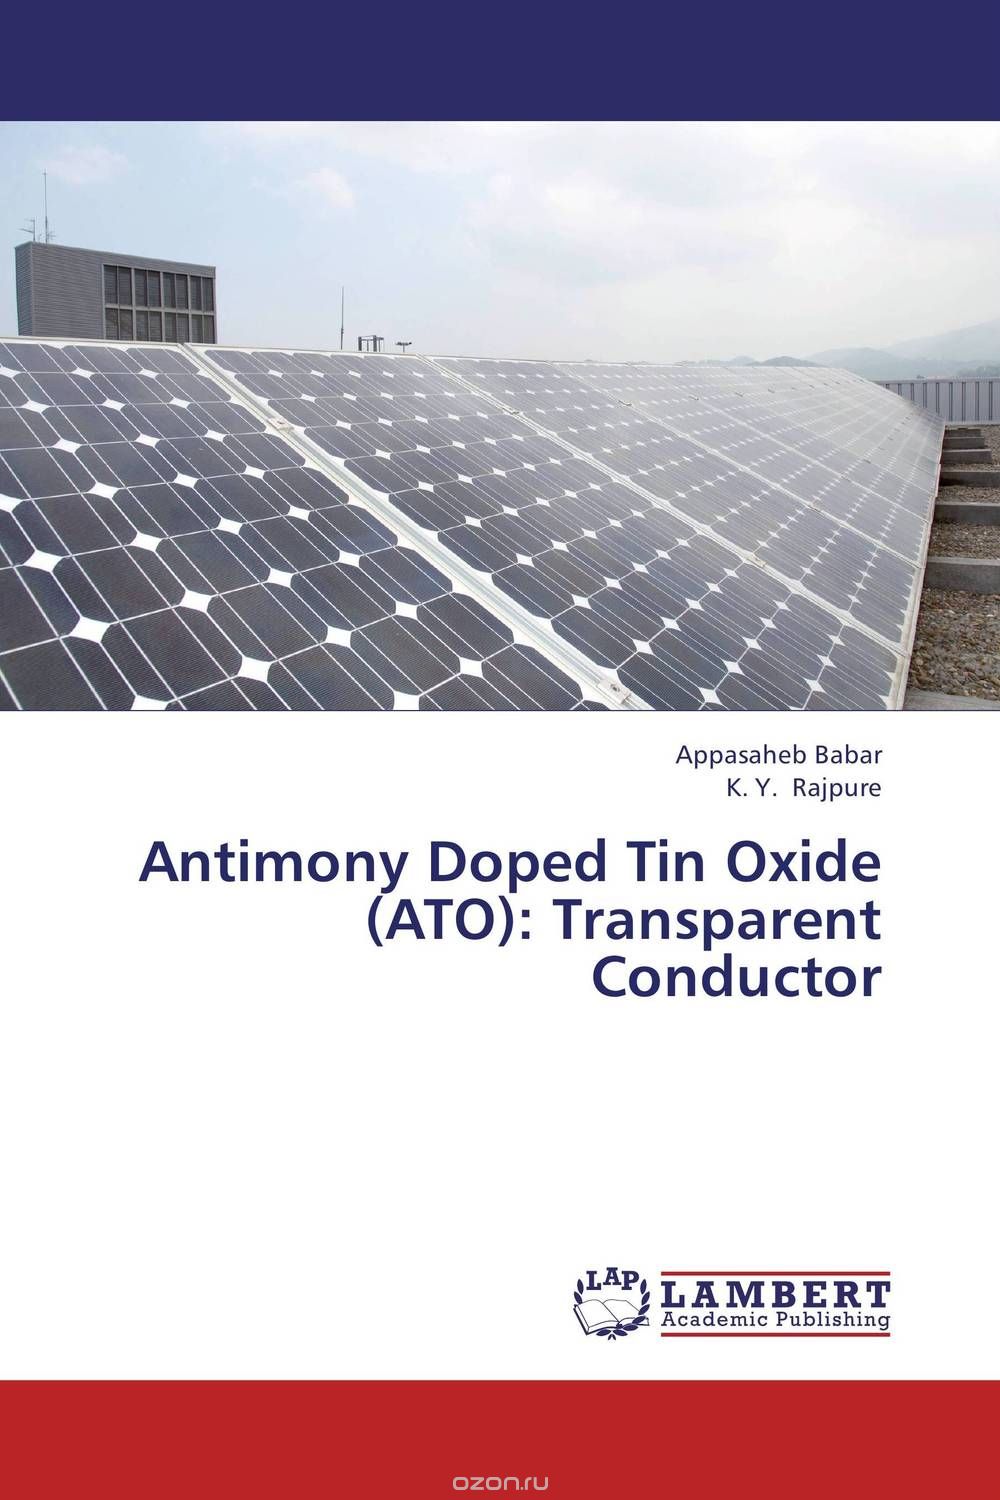 Скачать книгу "Antimony Doped Tin Oxide (ATO): Transparent Conductor"